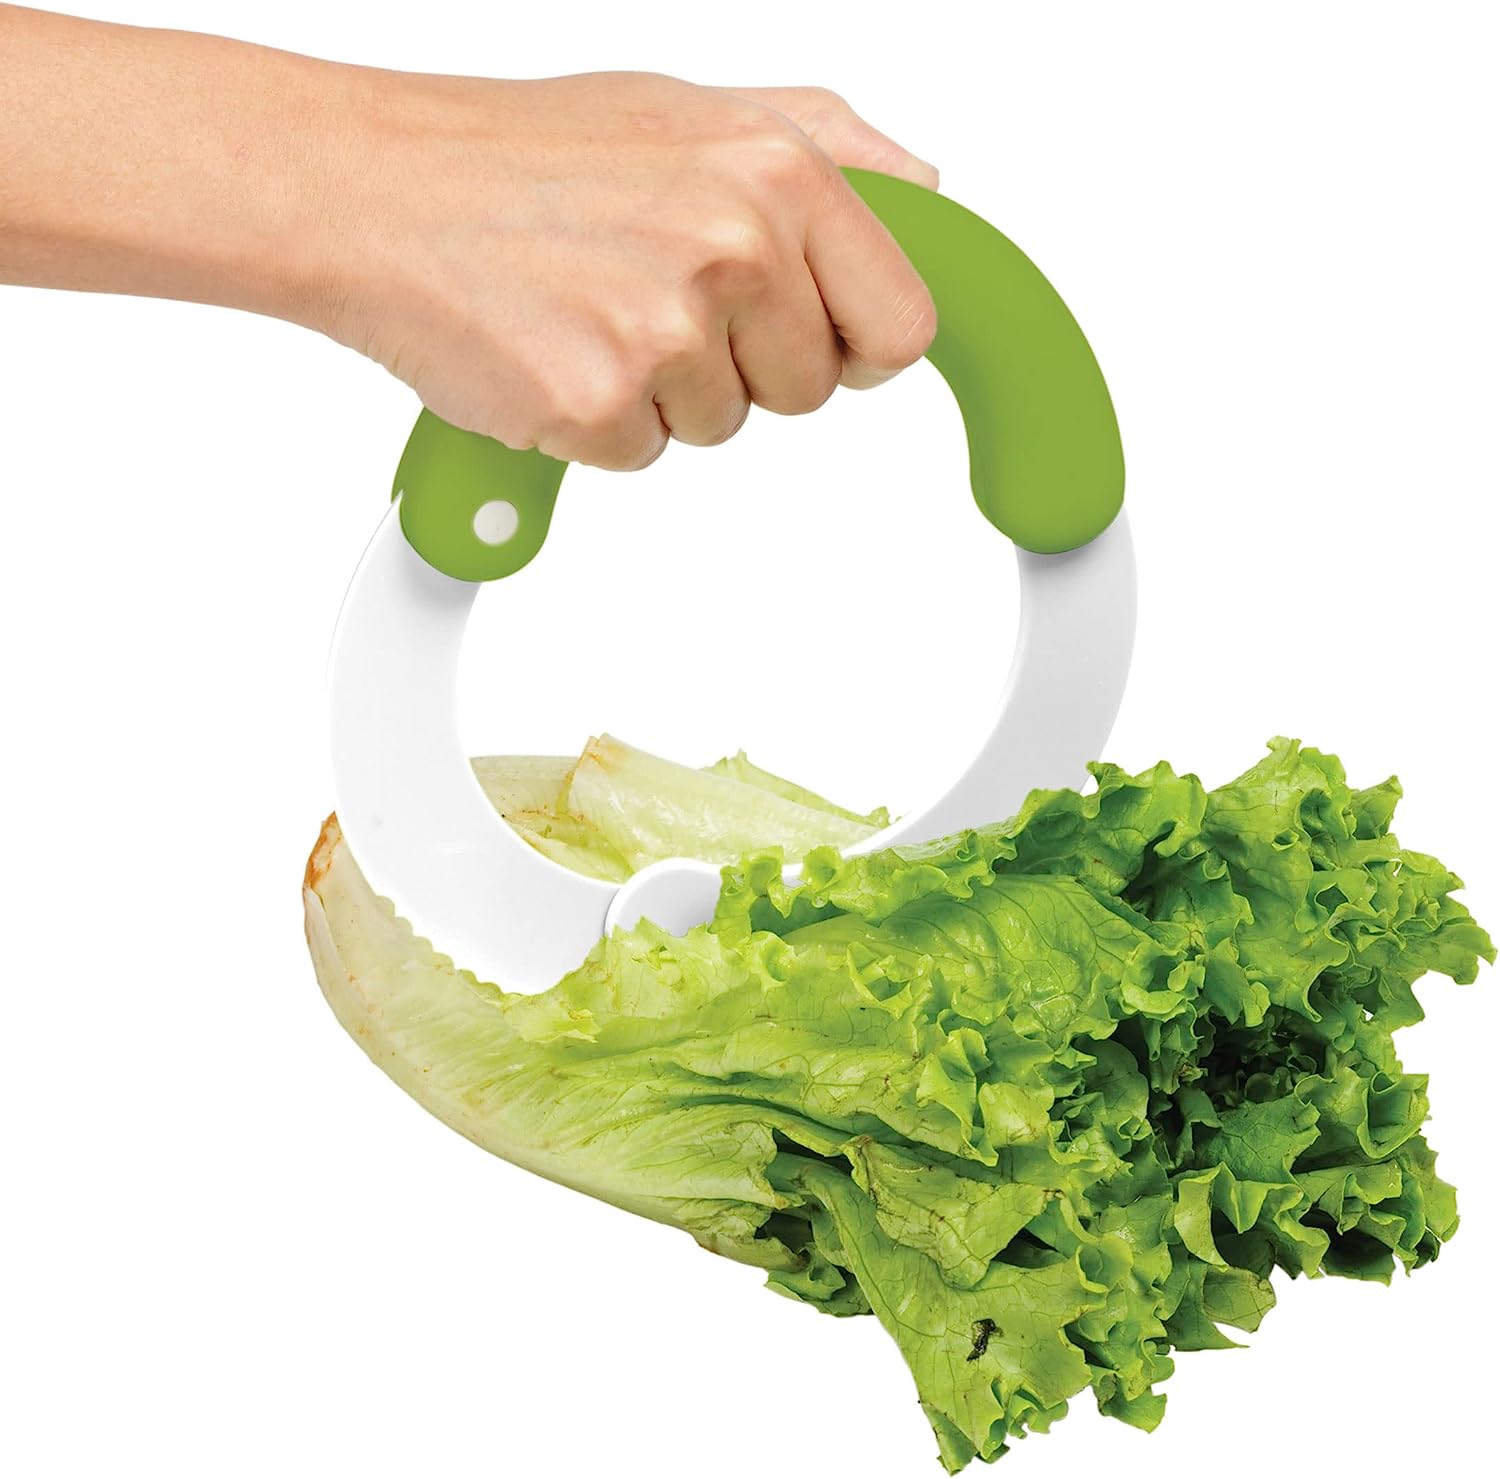 Chef'n SaladShears Nylon Lettuce Chopper